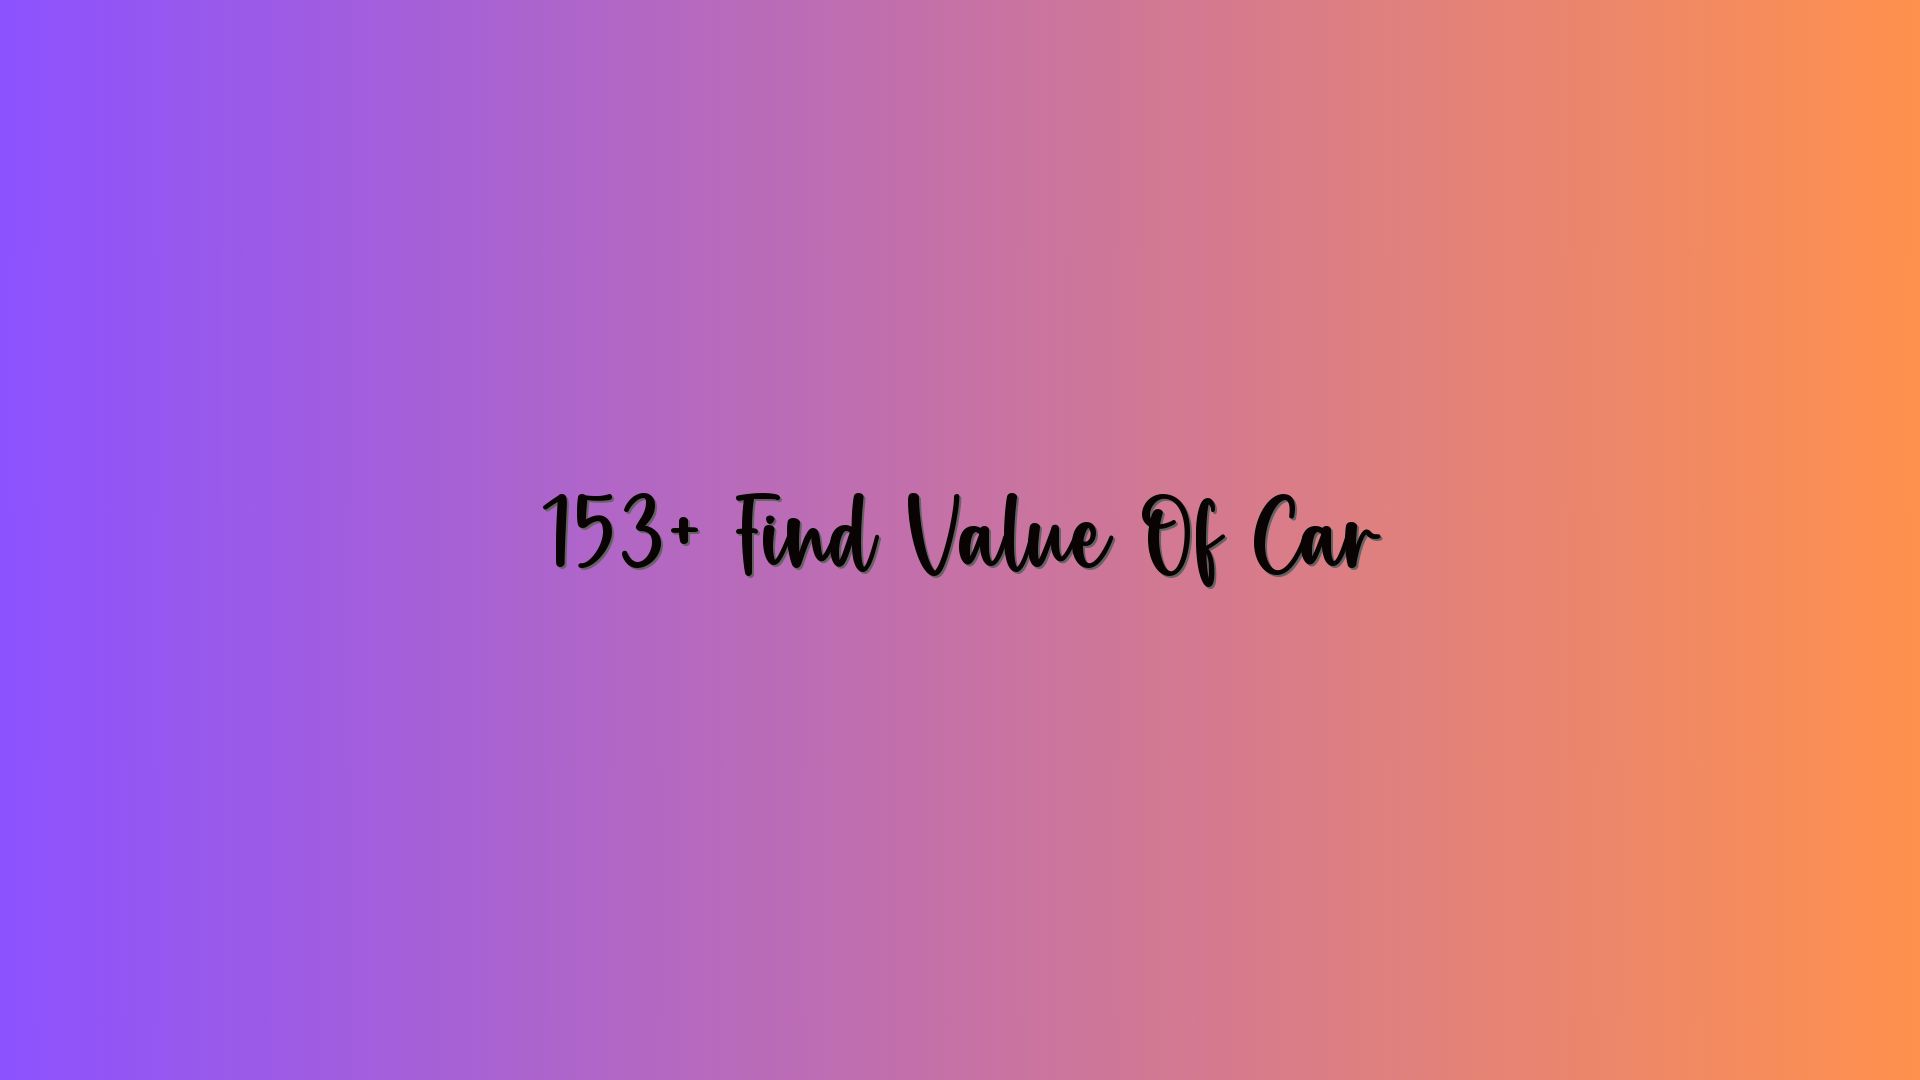 153+ Find Value Of Car